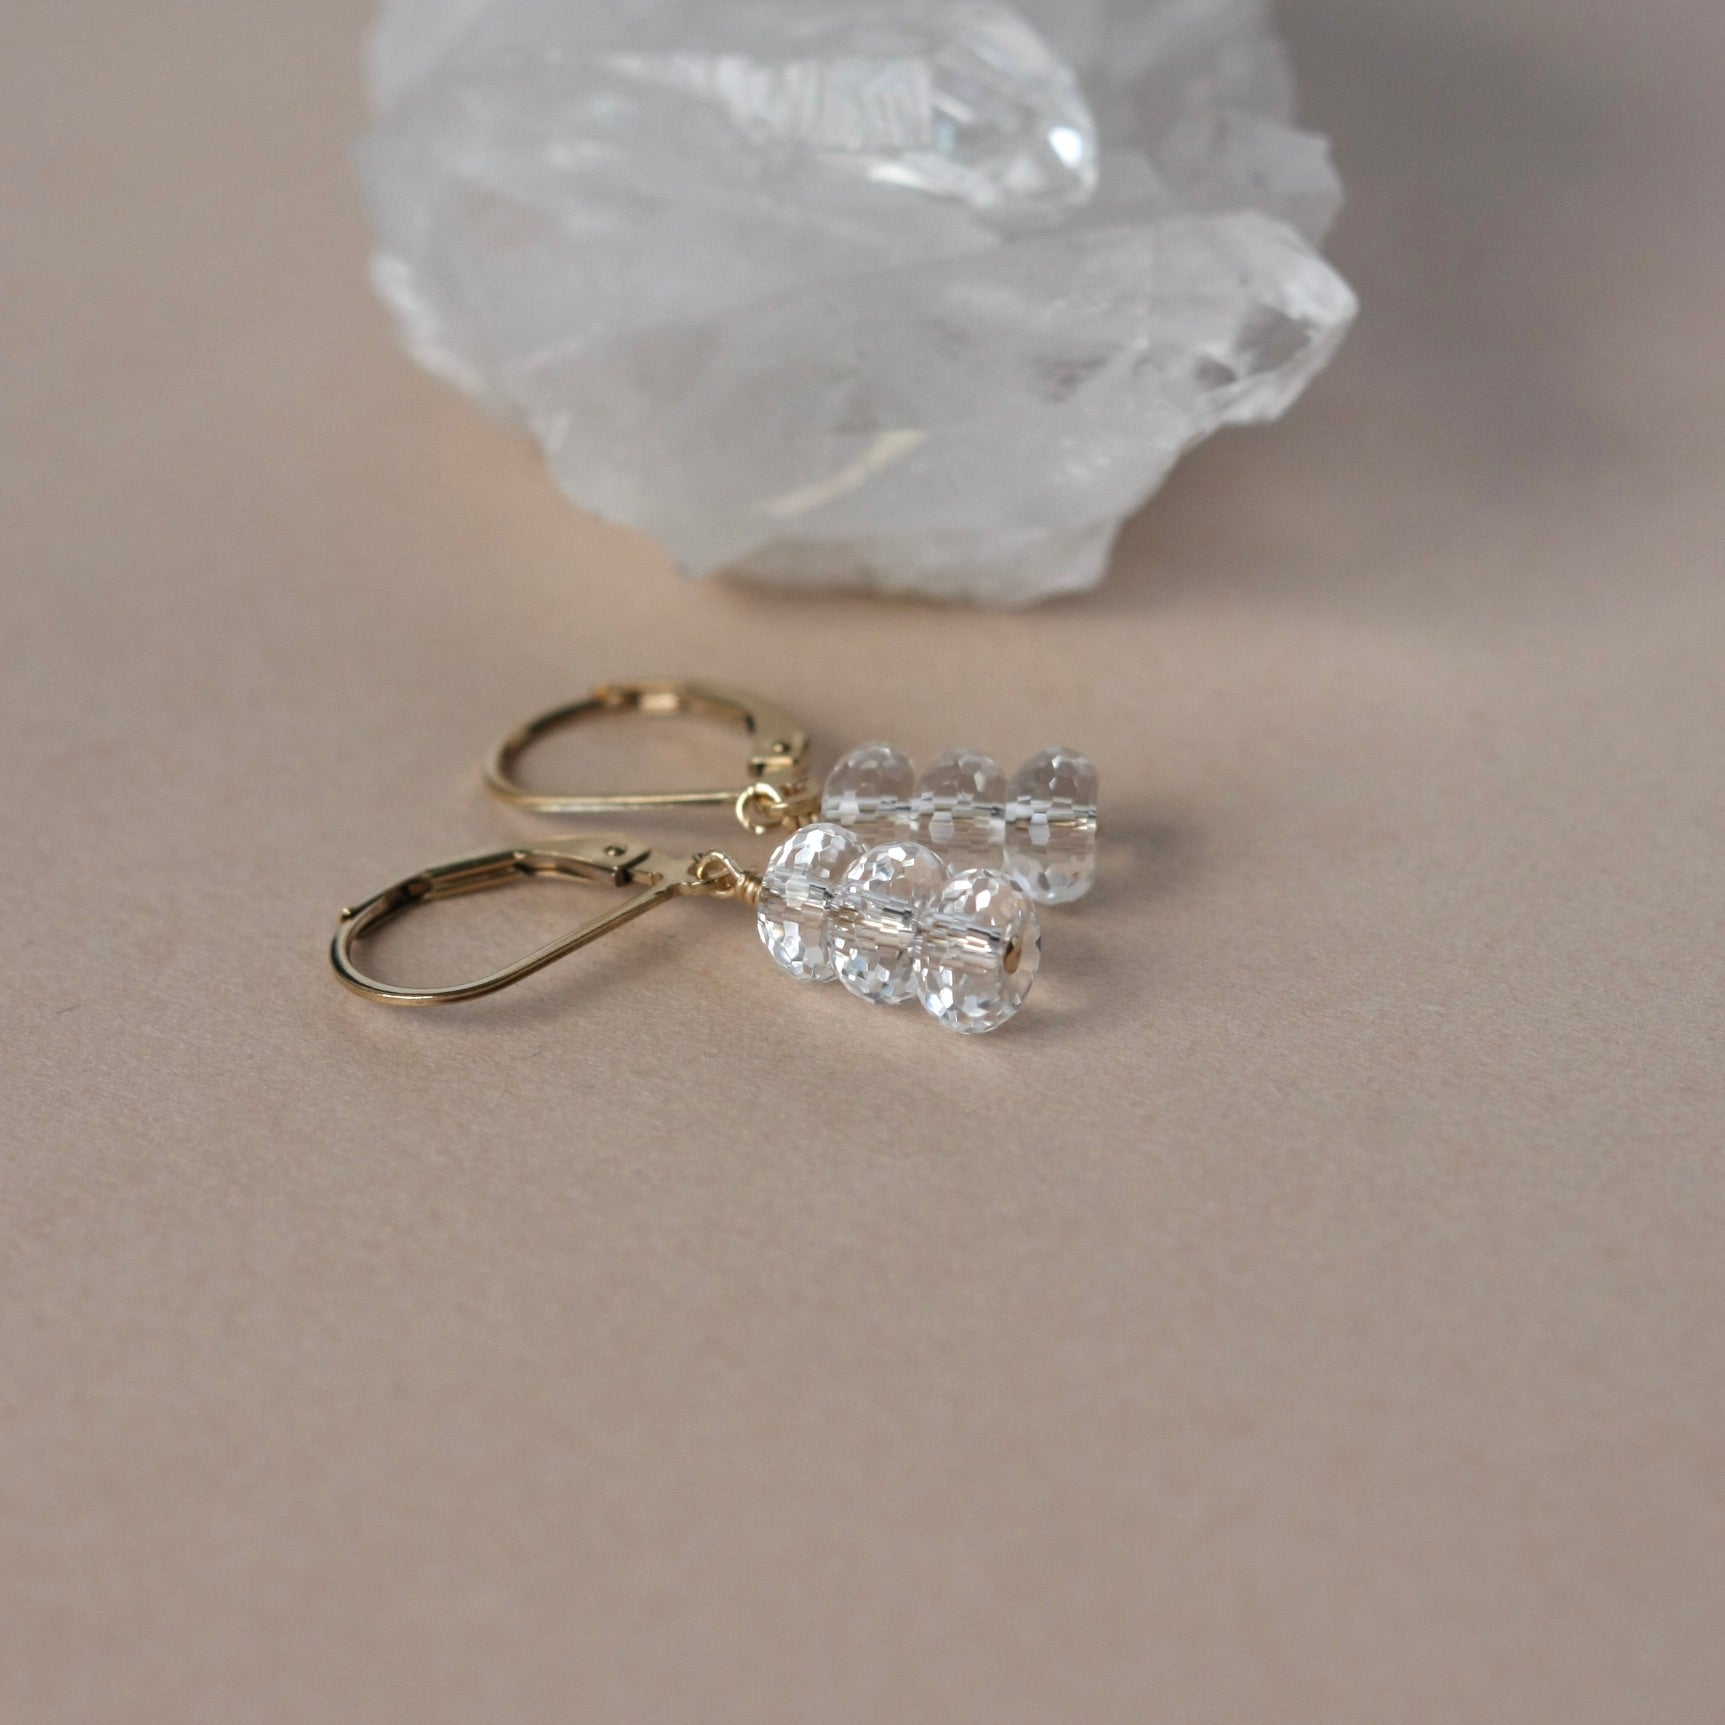 Gold Faceted Crystal Quartz Dangle Earrings